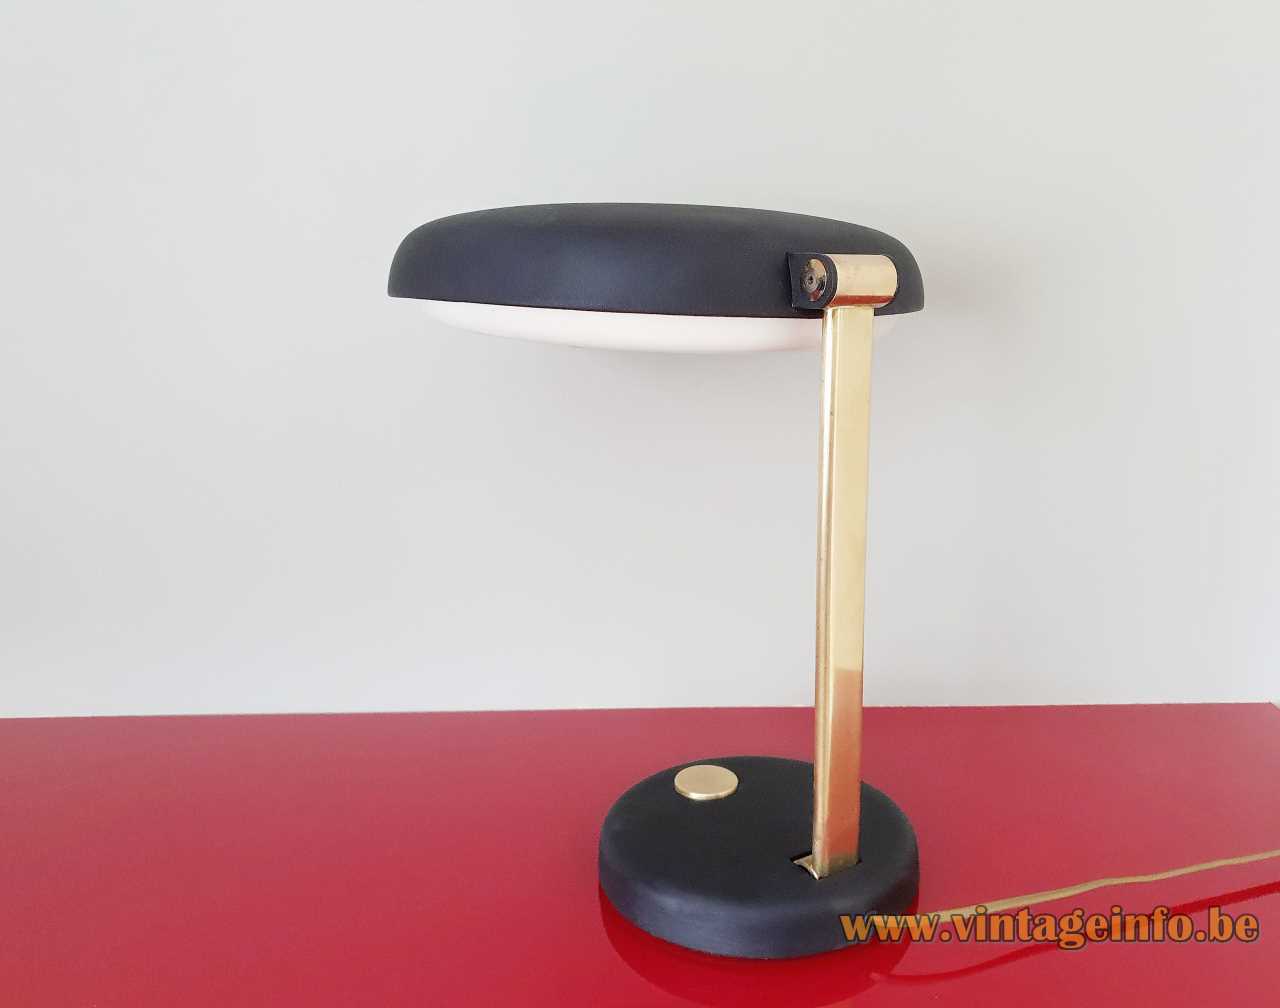 Heinz Stahl Hillebrand desk lamp black round base & lampshade big switch brass slat 1960s 1970s Germany